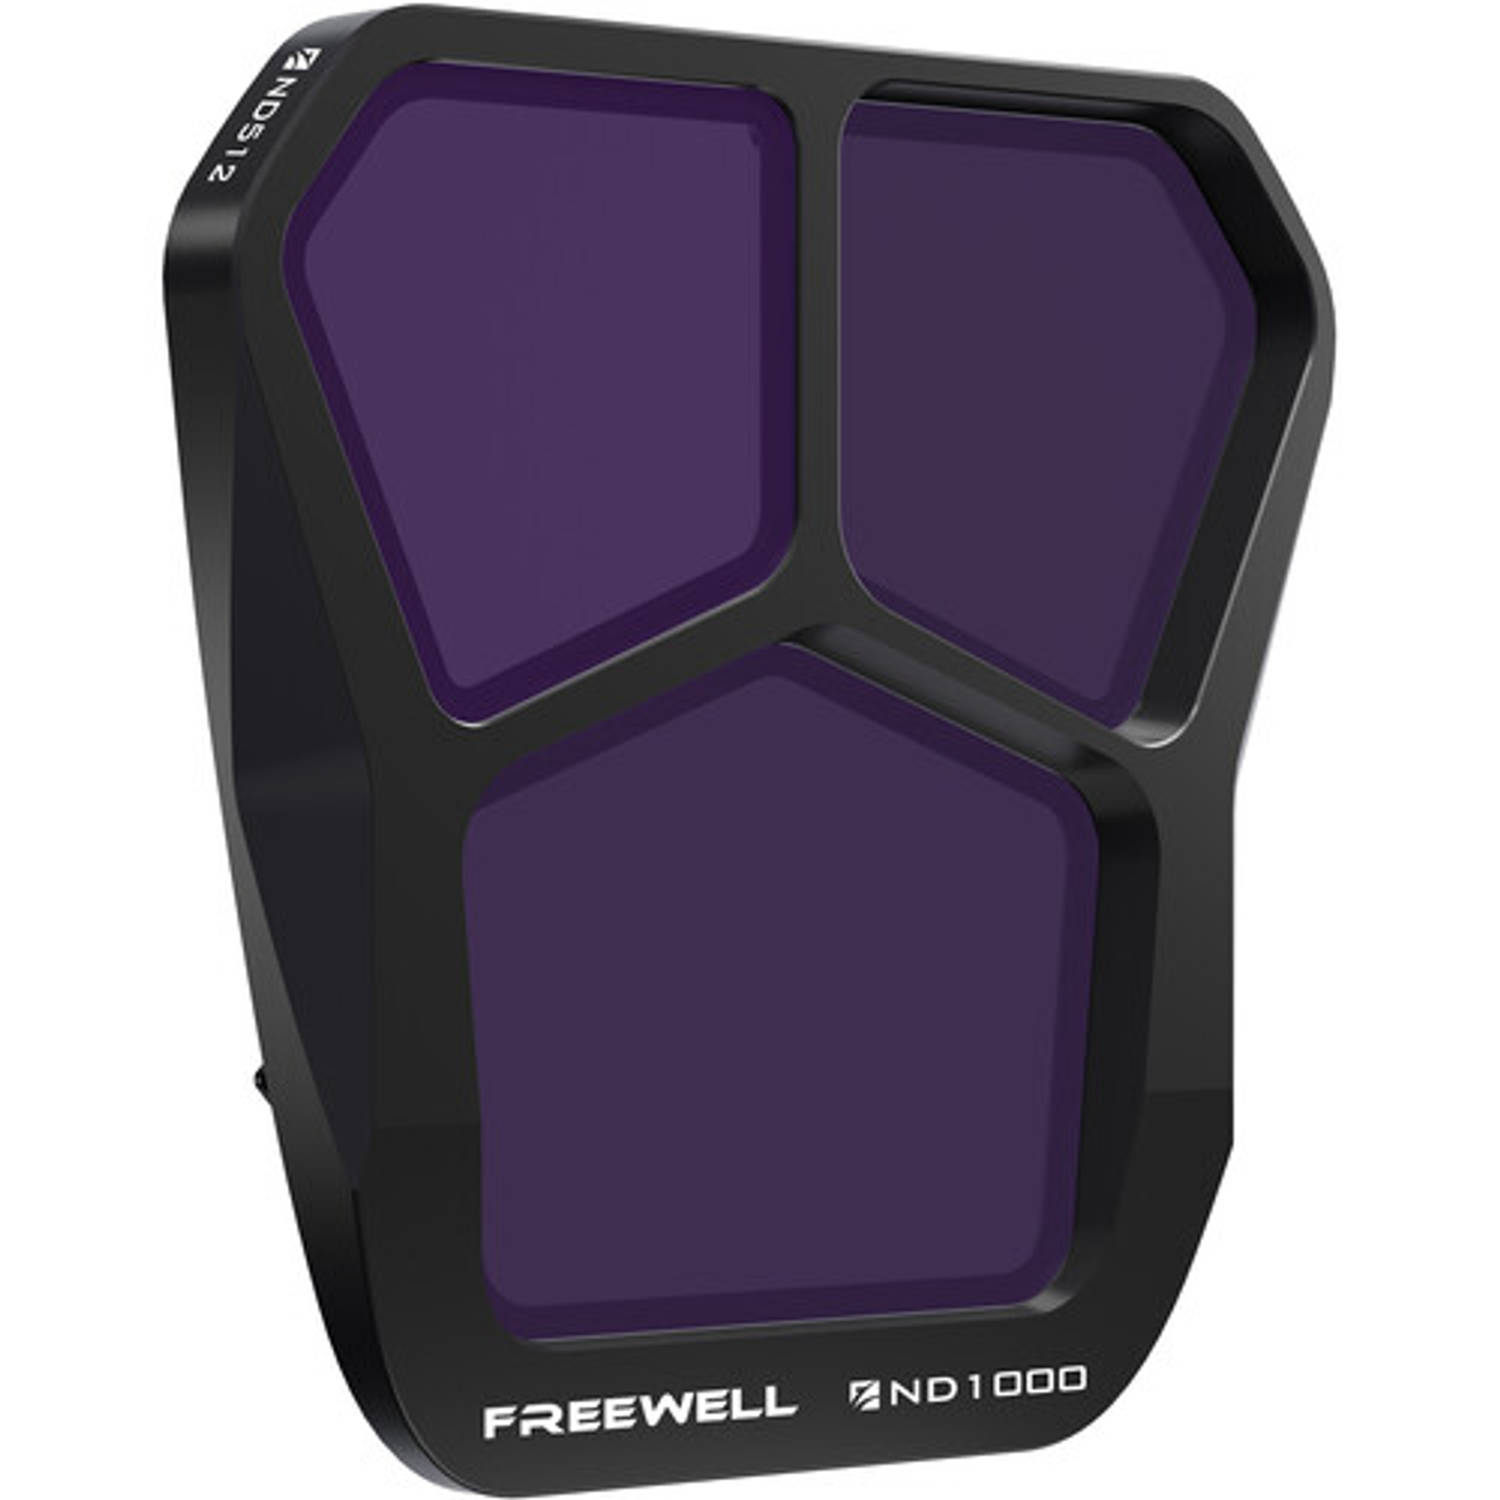 Freewell DJI Mavic 3 Pro -ND1000 Neutral Density Filter